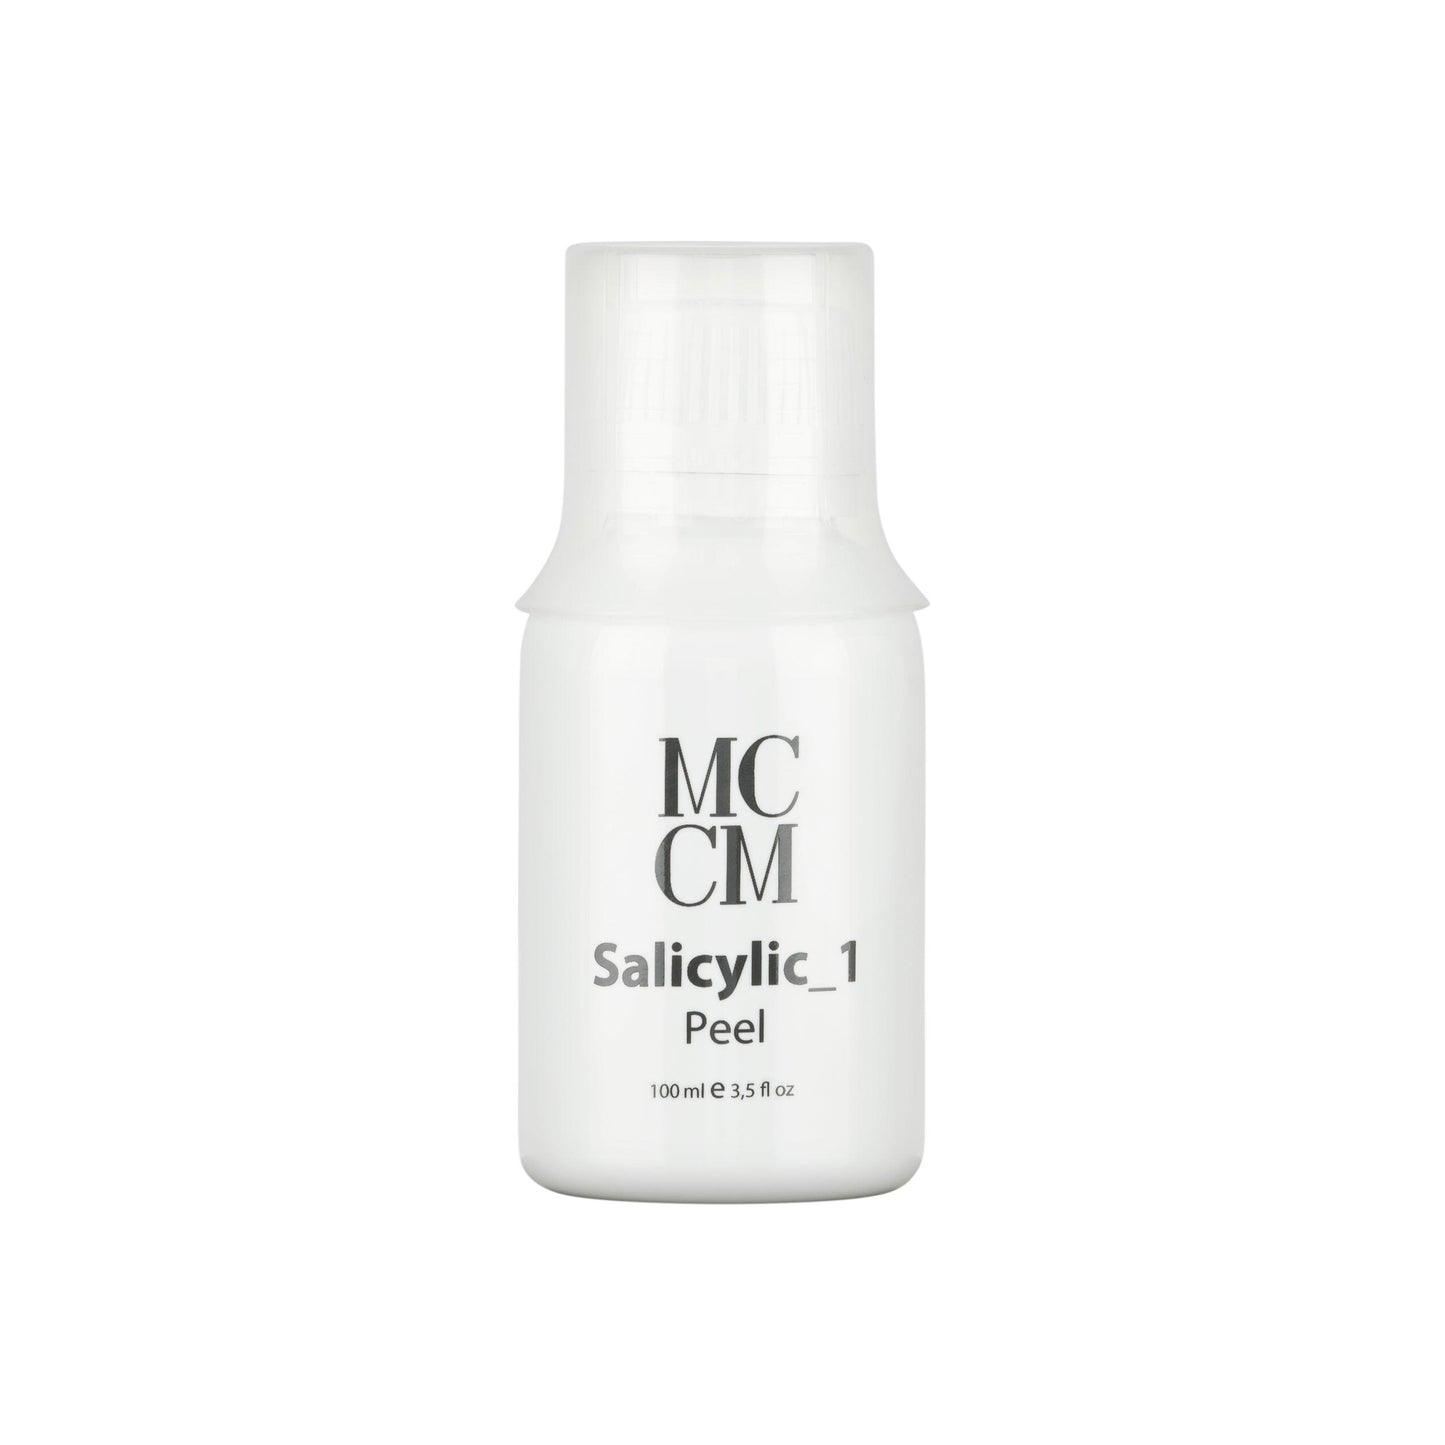 Salicylic_1 Peel - MCCM Medical Cosmetics